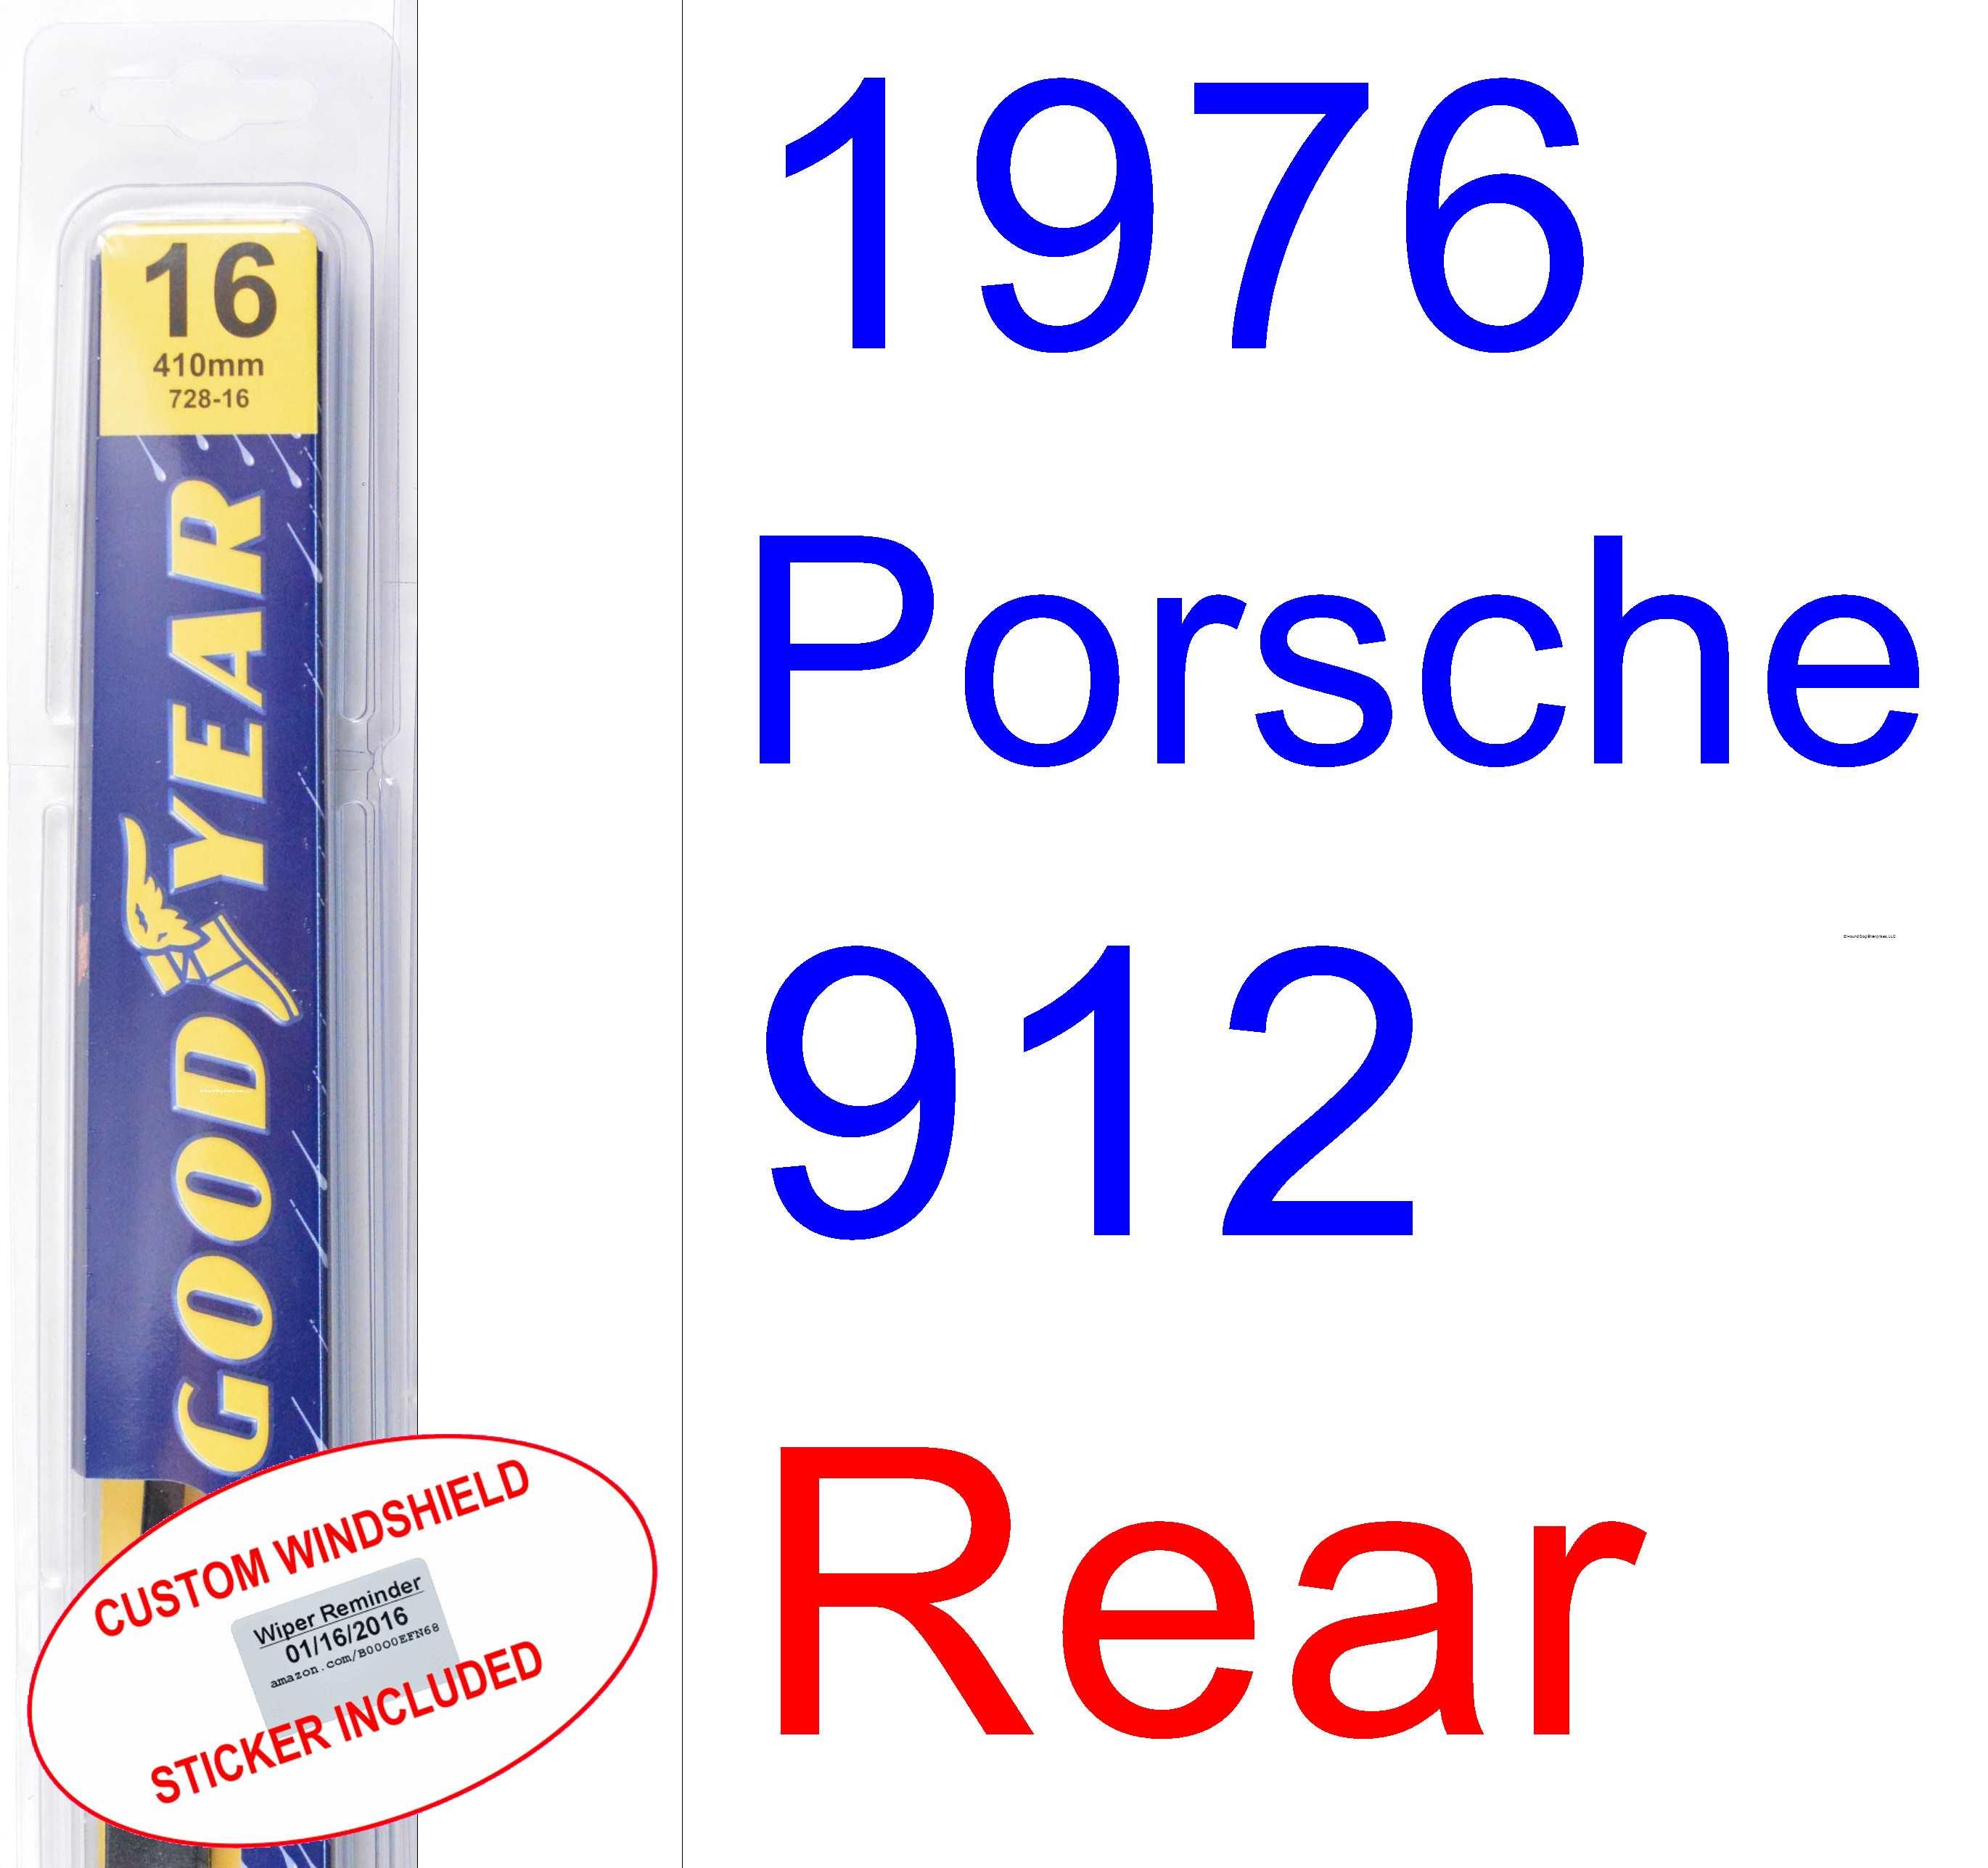 1976 Porsche 912 Replacement Wiper Blade Set/Kit (Set of 2 Blades)